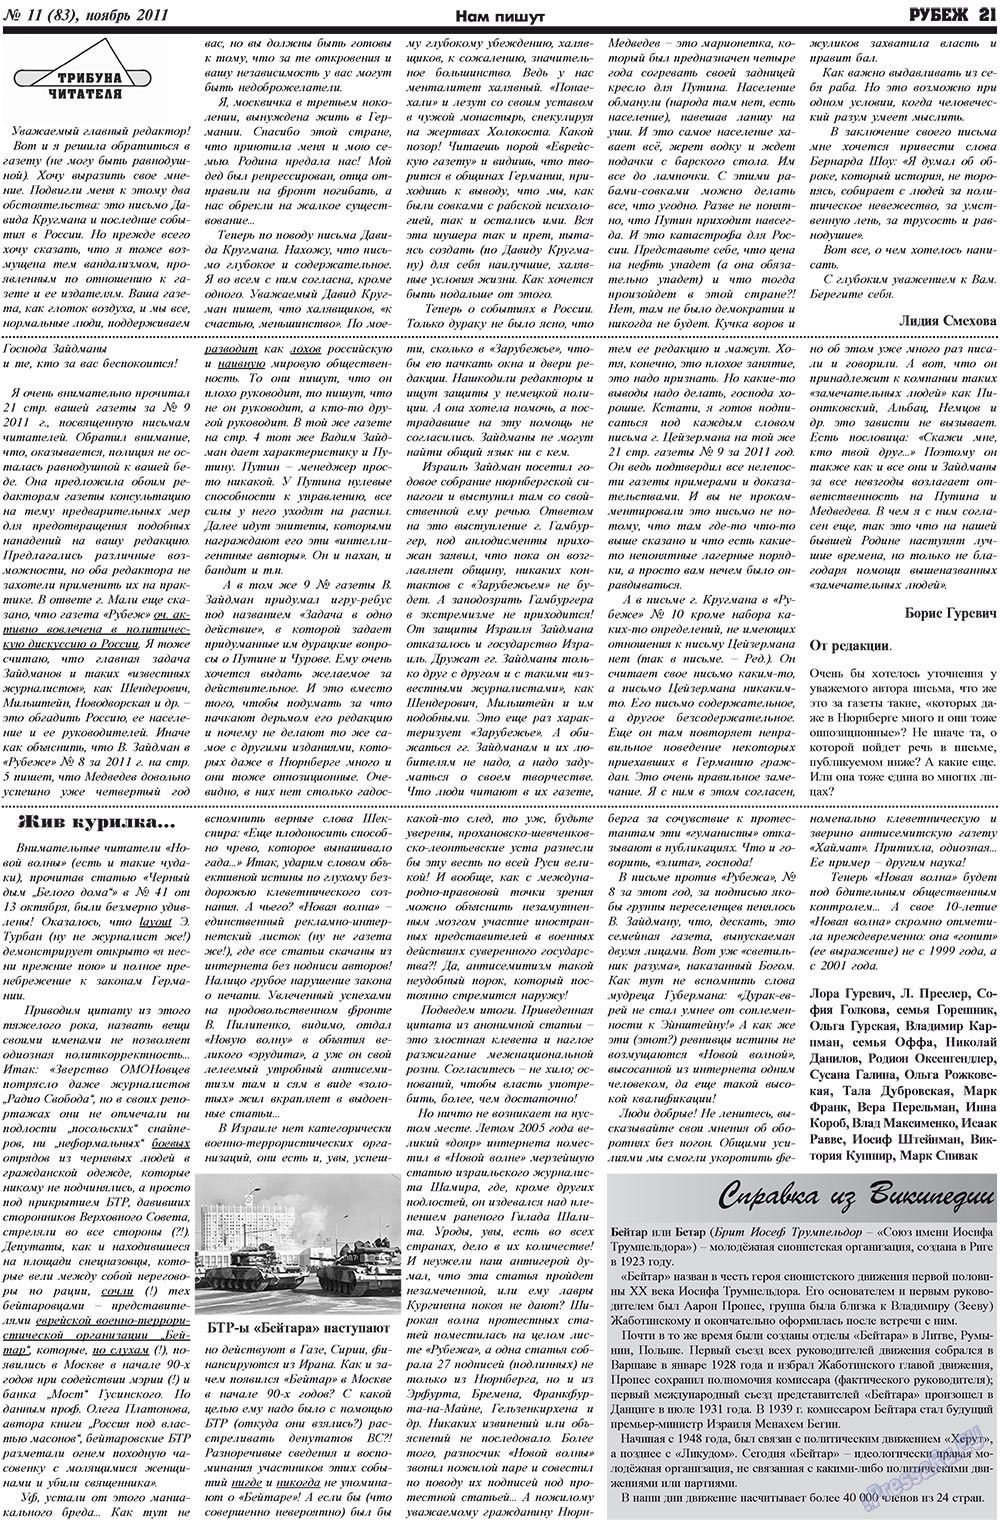 Рубеж, газета. 2011 №11 стр.21